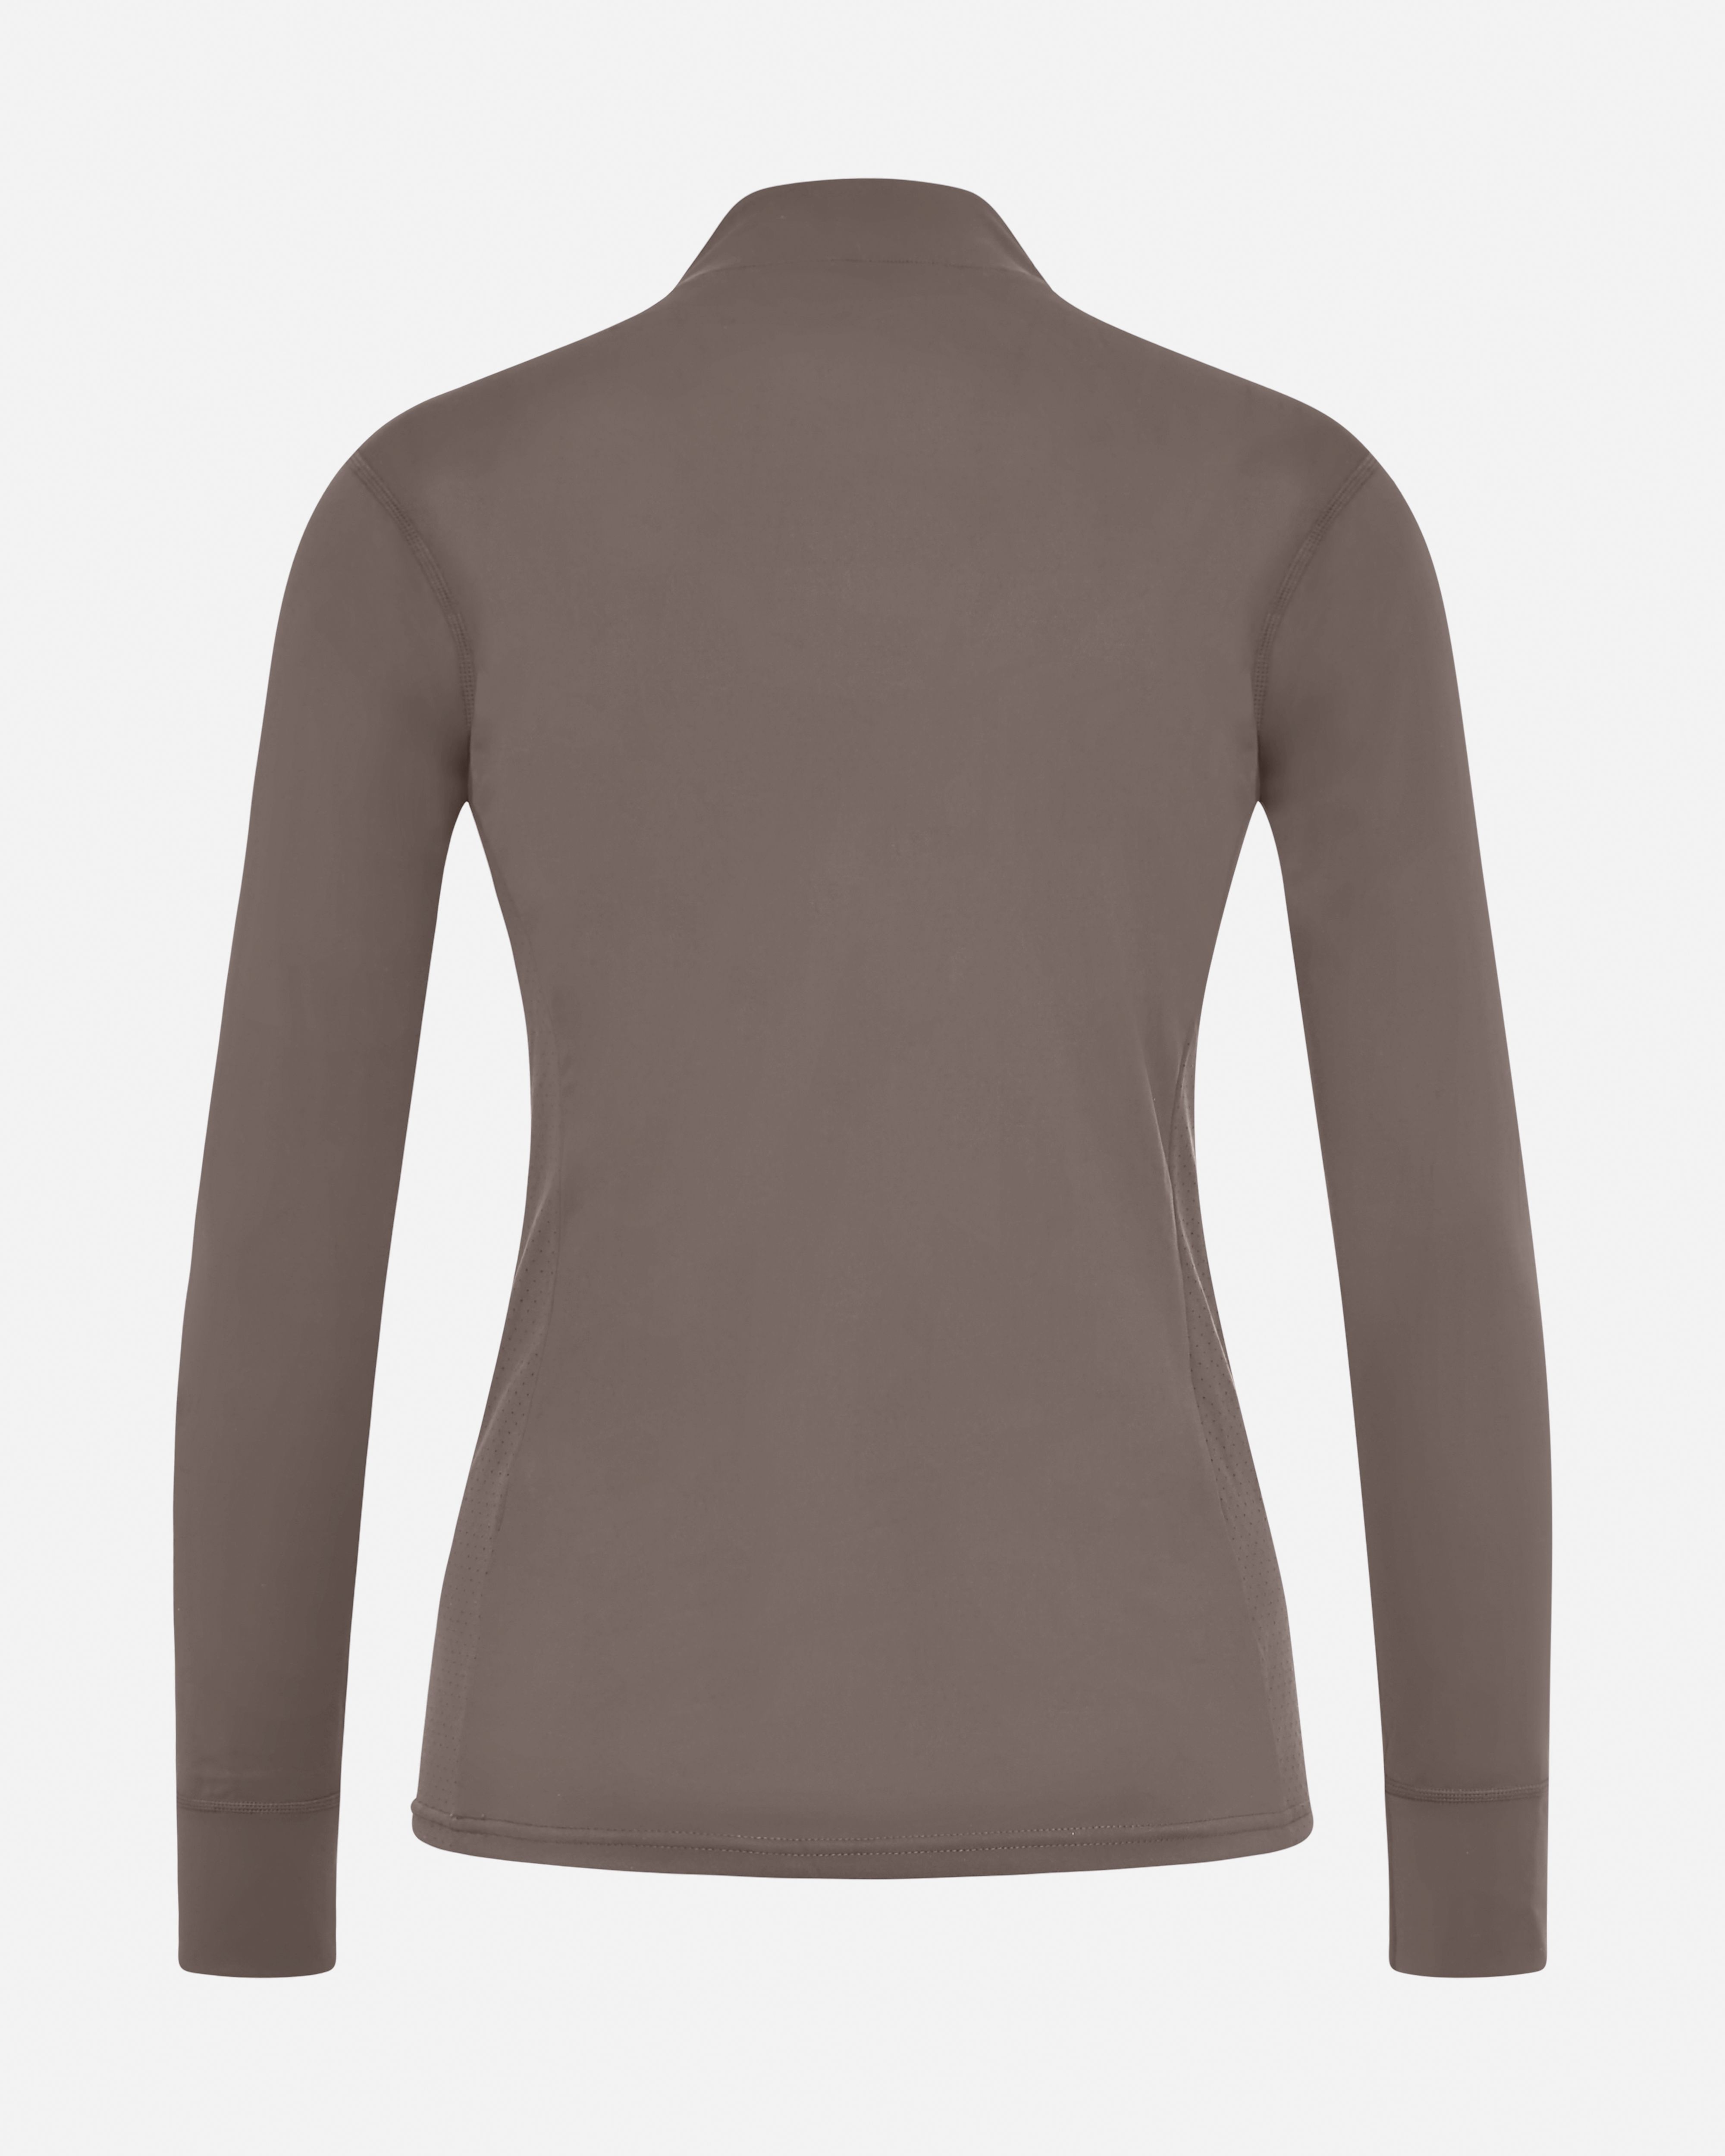 eaSt UV-Protection Shirt | Driftwood | L